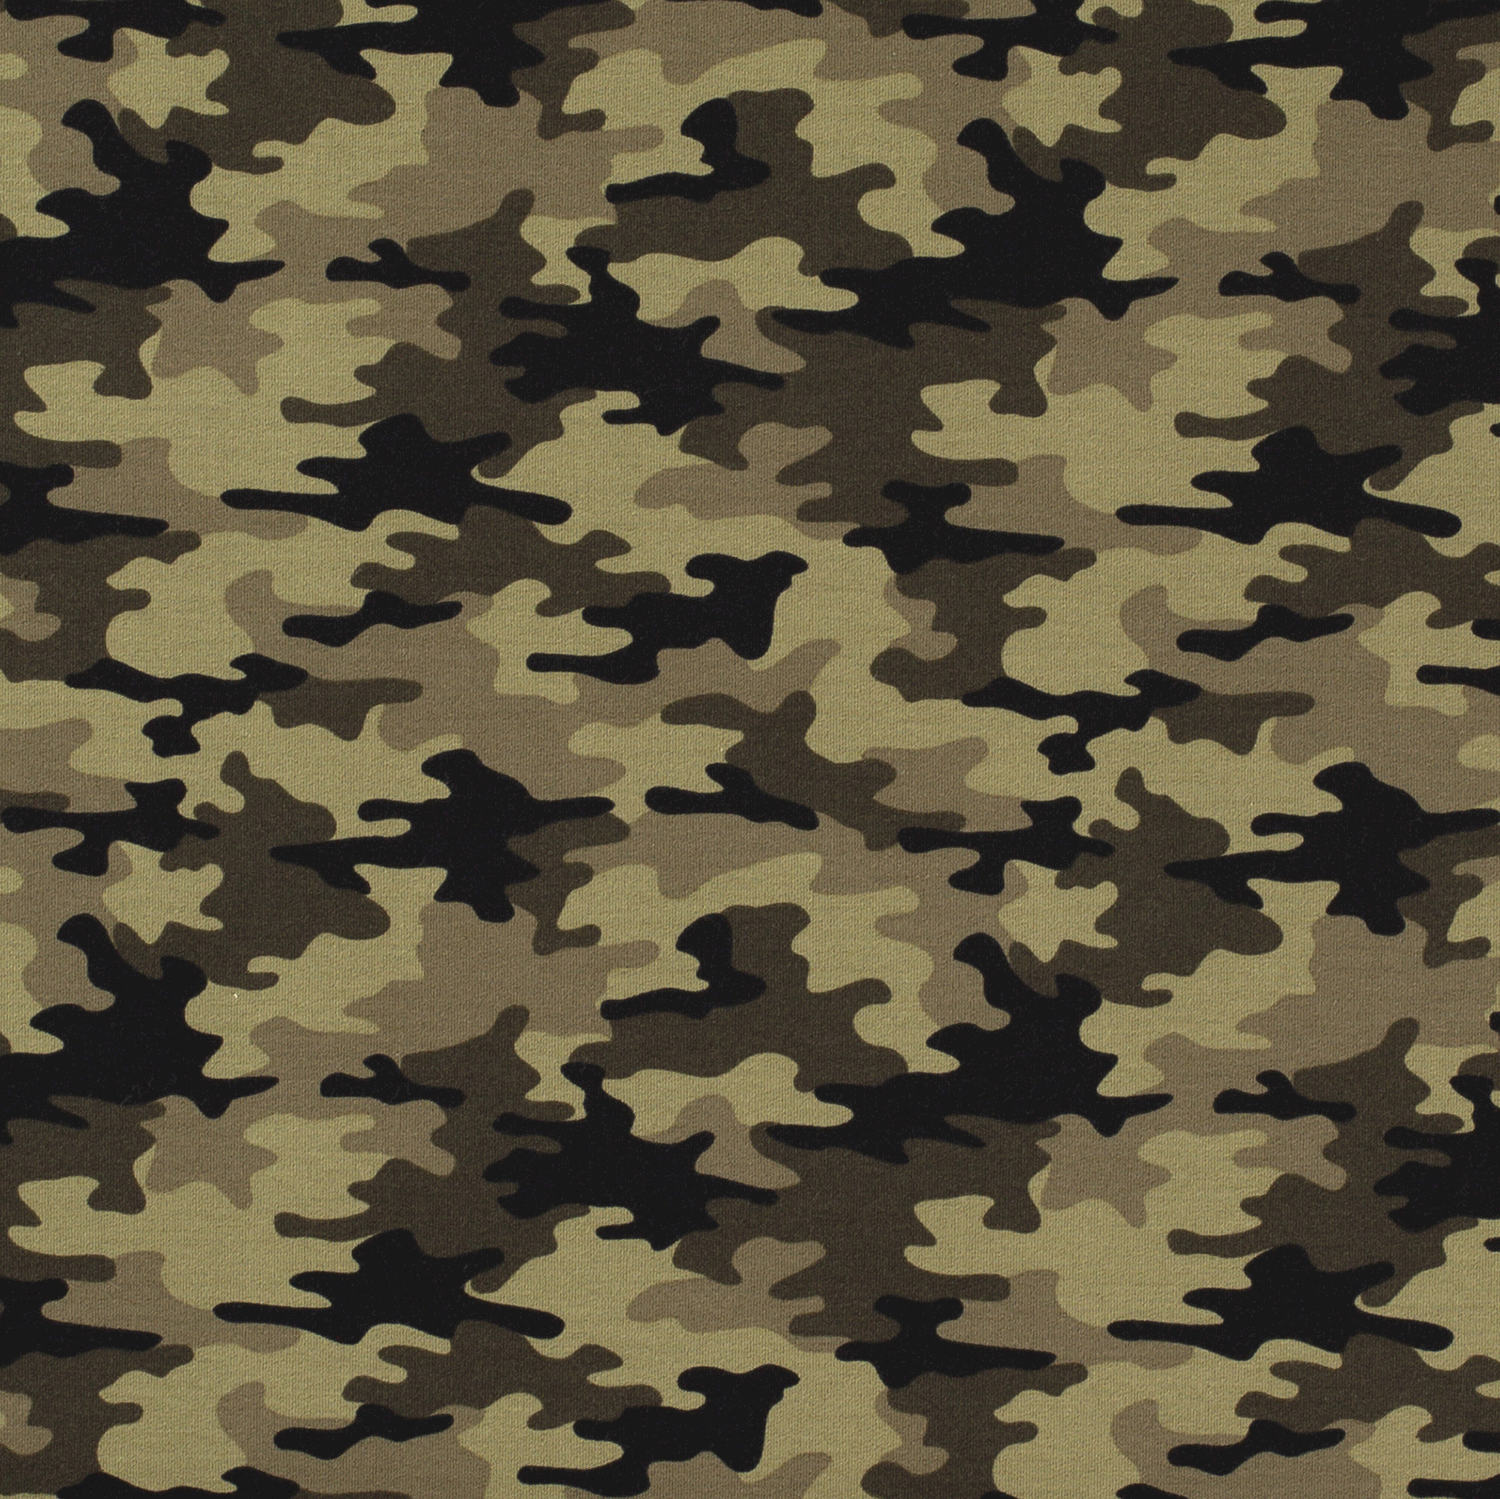 FT Printed Camouflage khaki